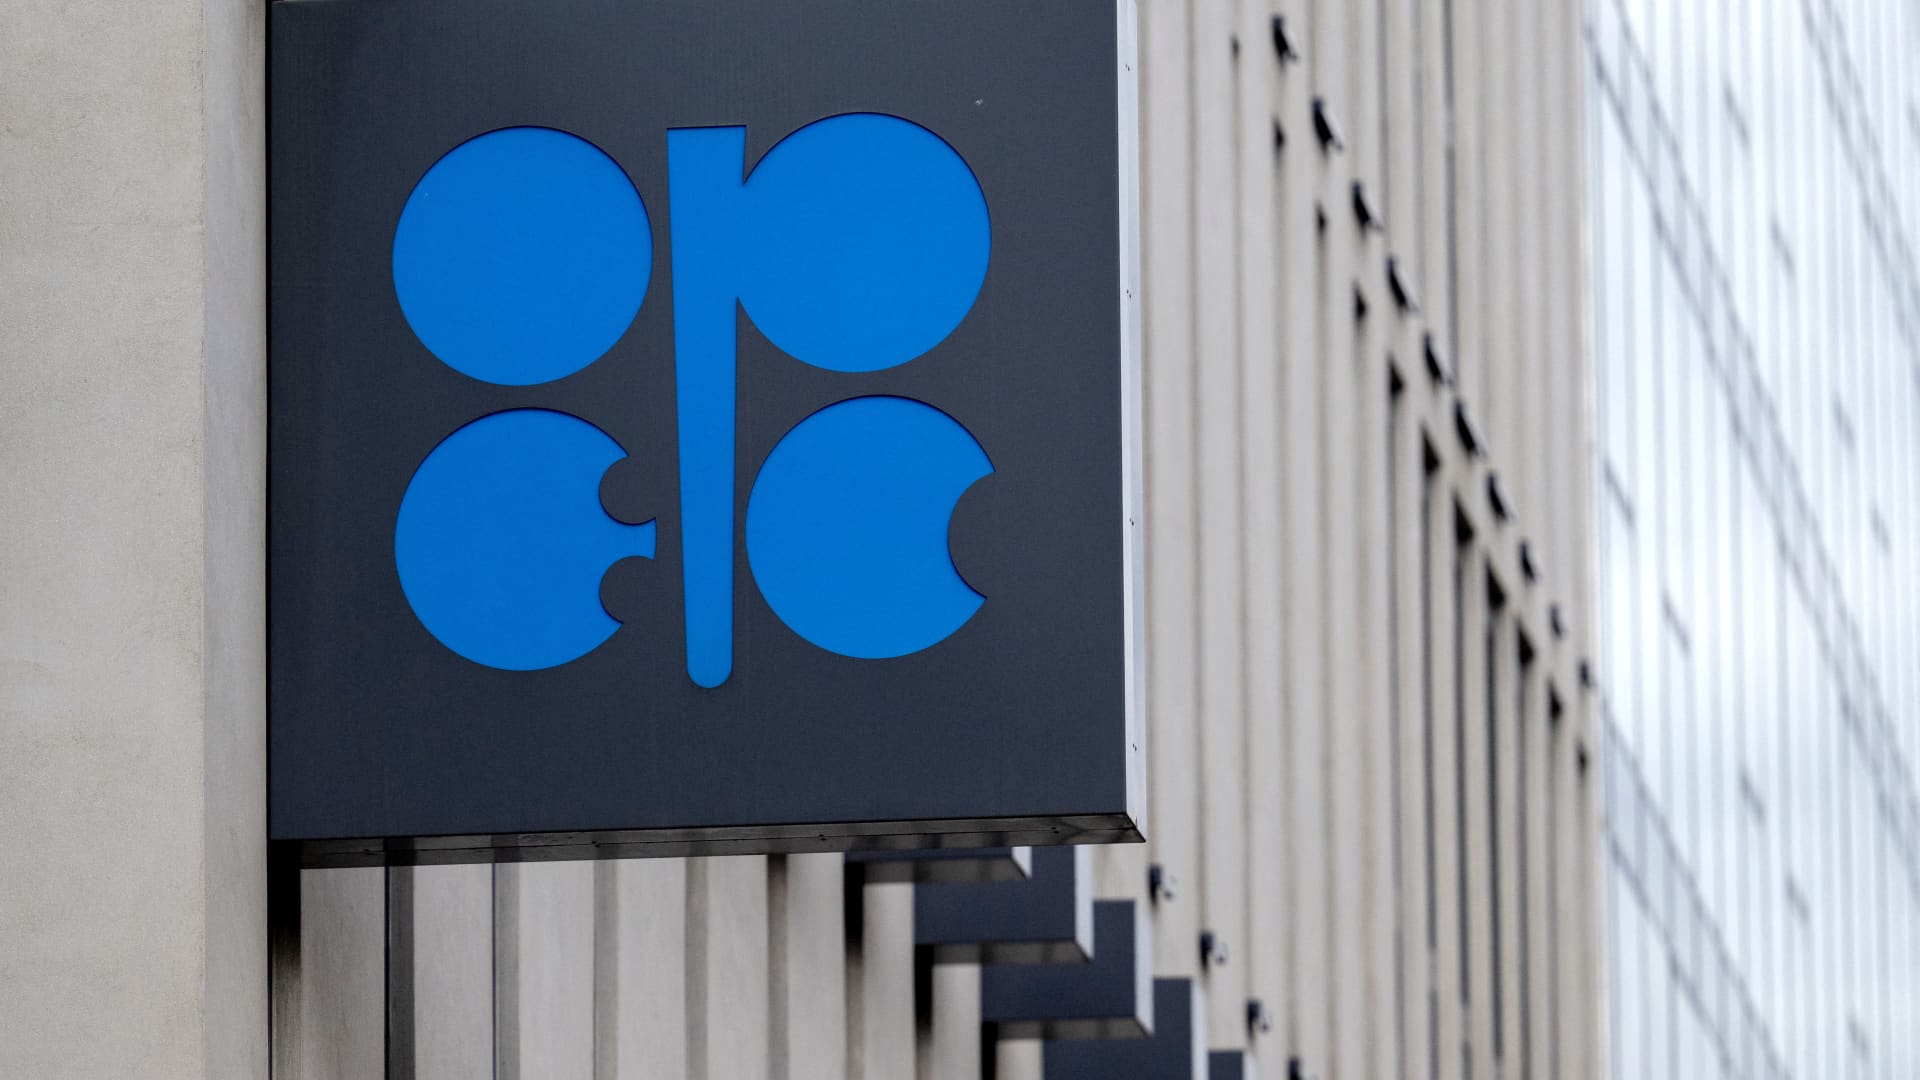 OPEC says oil demand will hit 110 million barrels per day in 2045